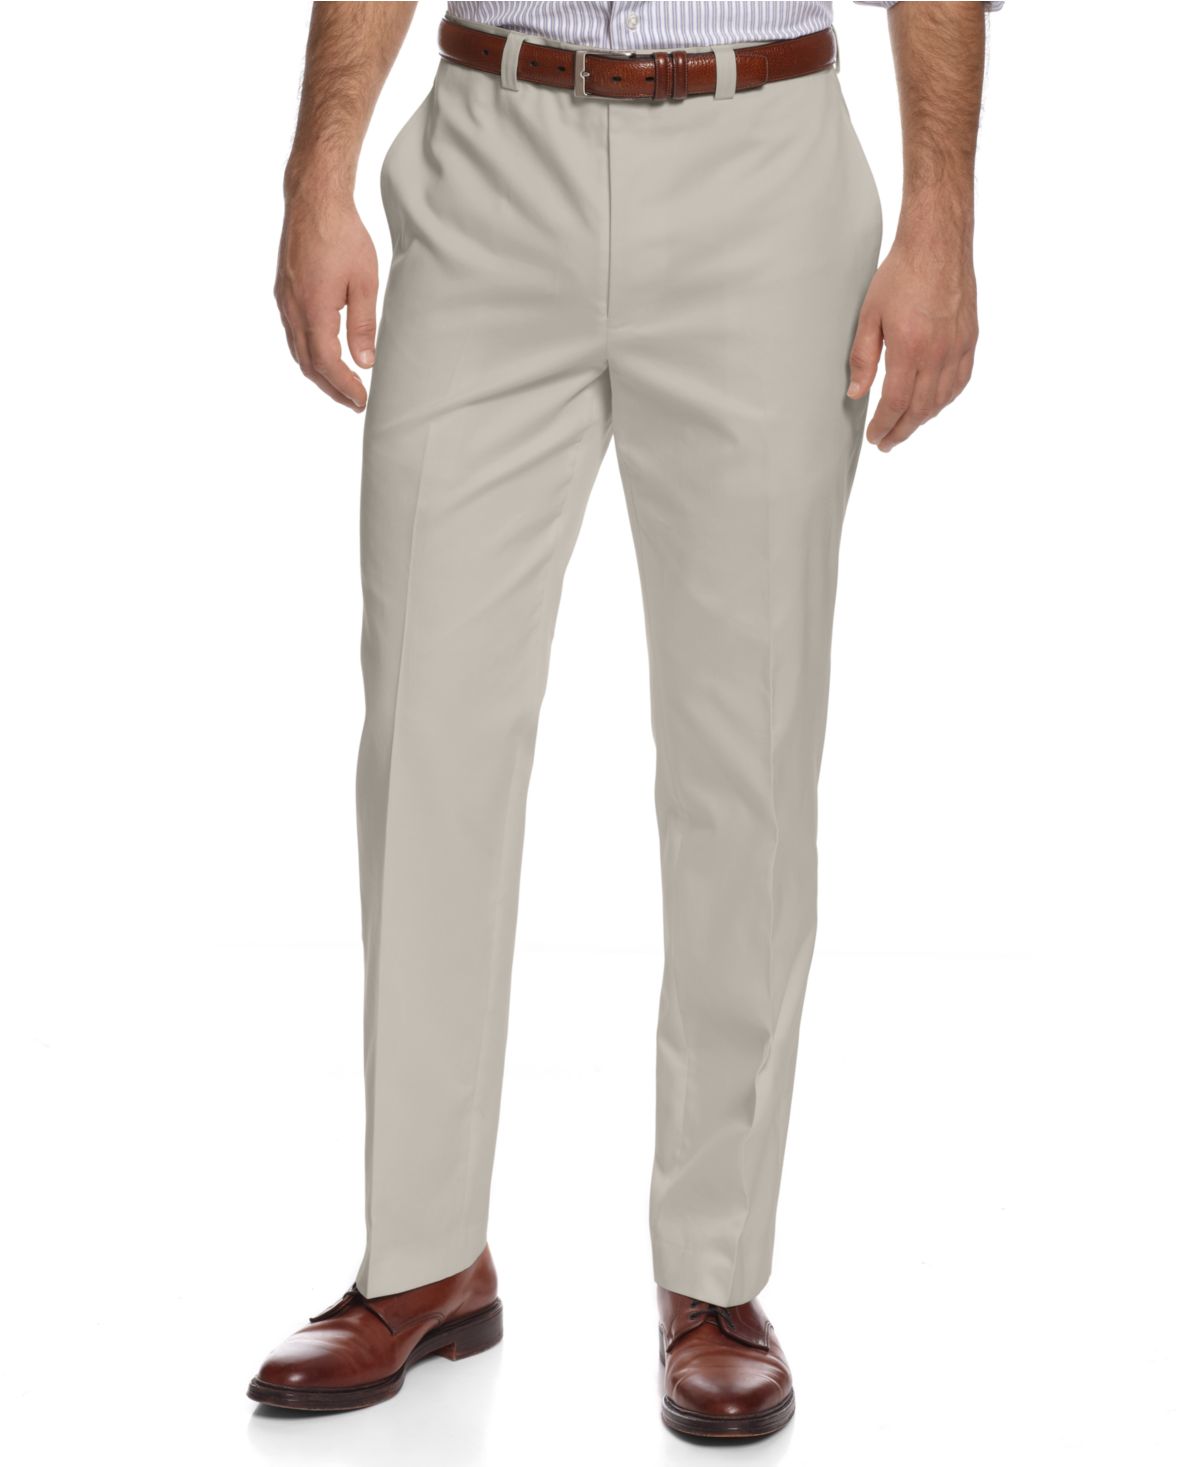 Ralph Lauren Men`s Cotton Dress Pants, Only $19.99 at Macy`s--Reg $95.00!